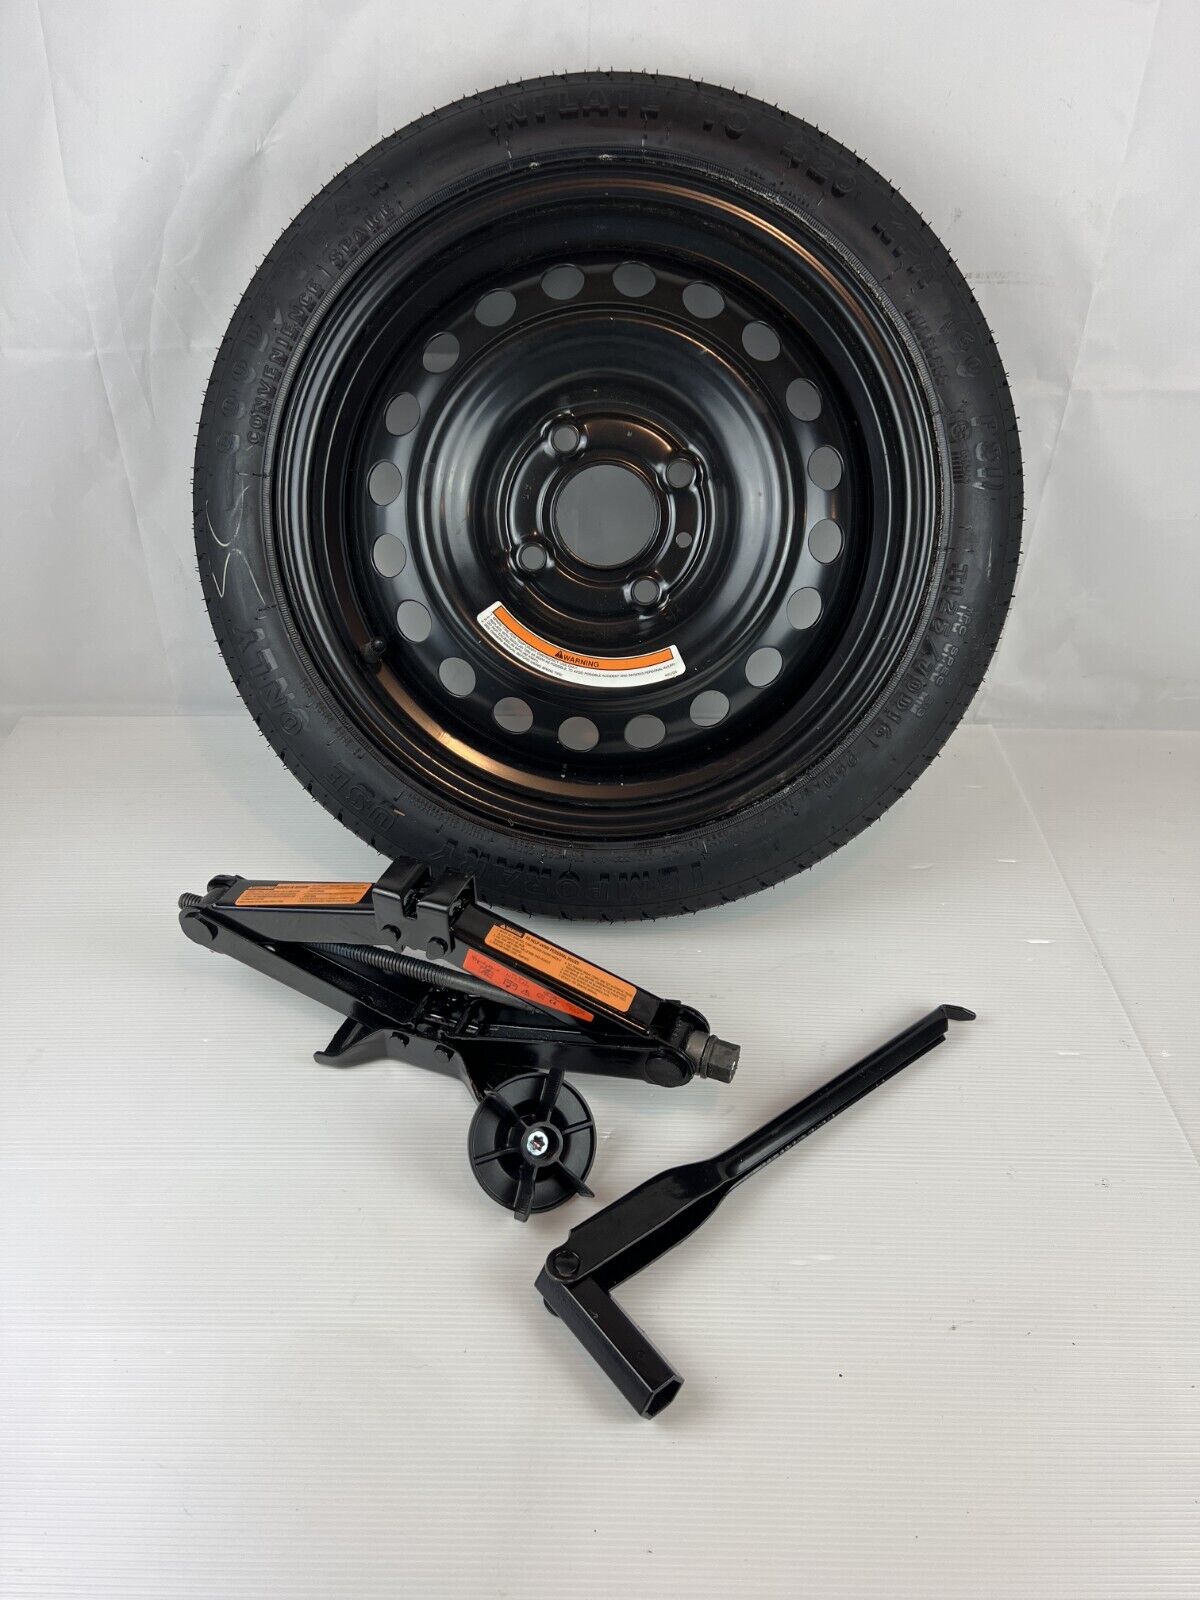 Spare Tire W/Jack Kit 16